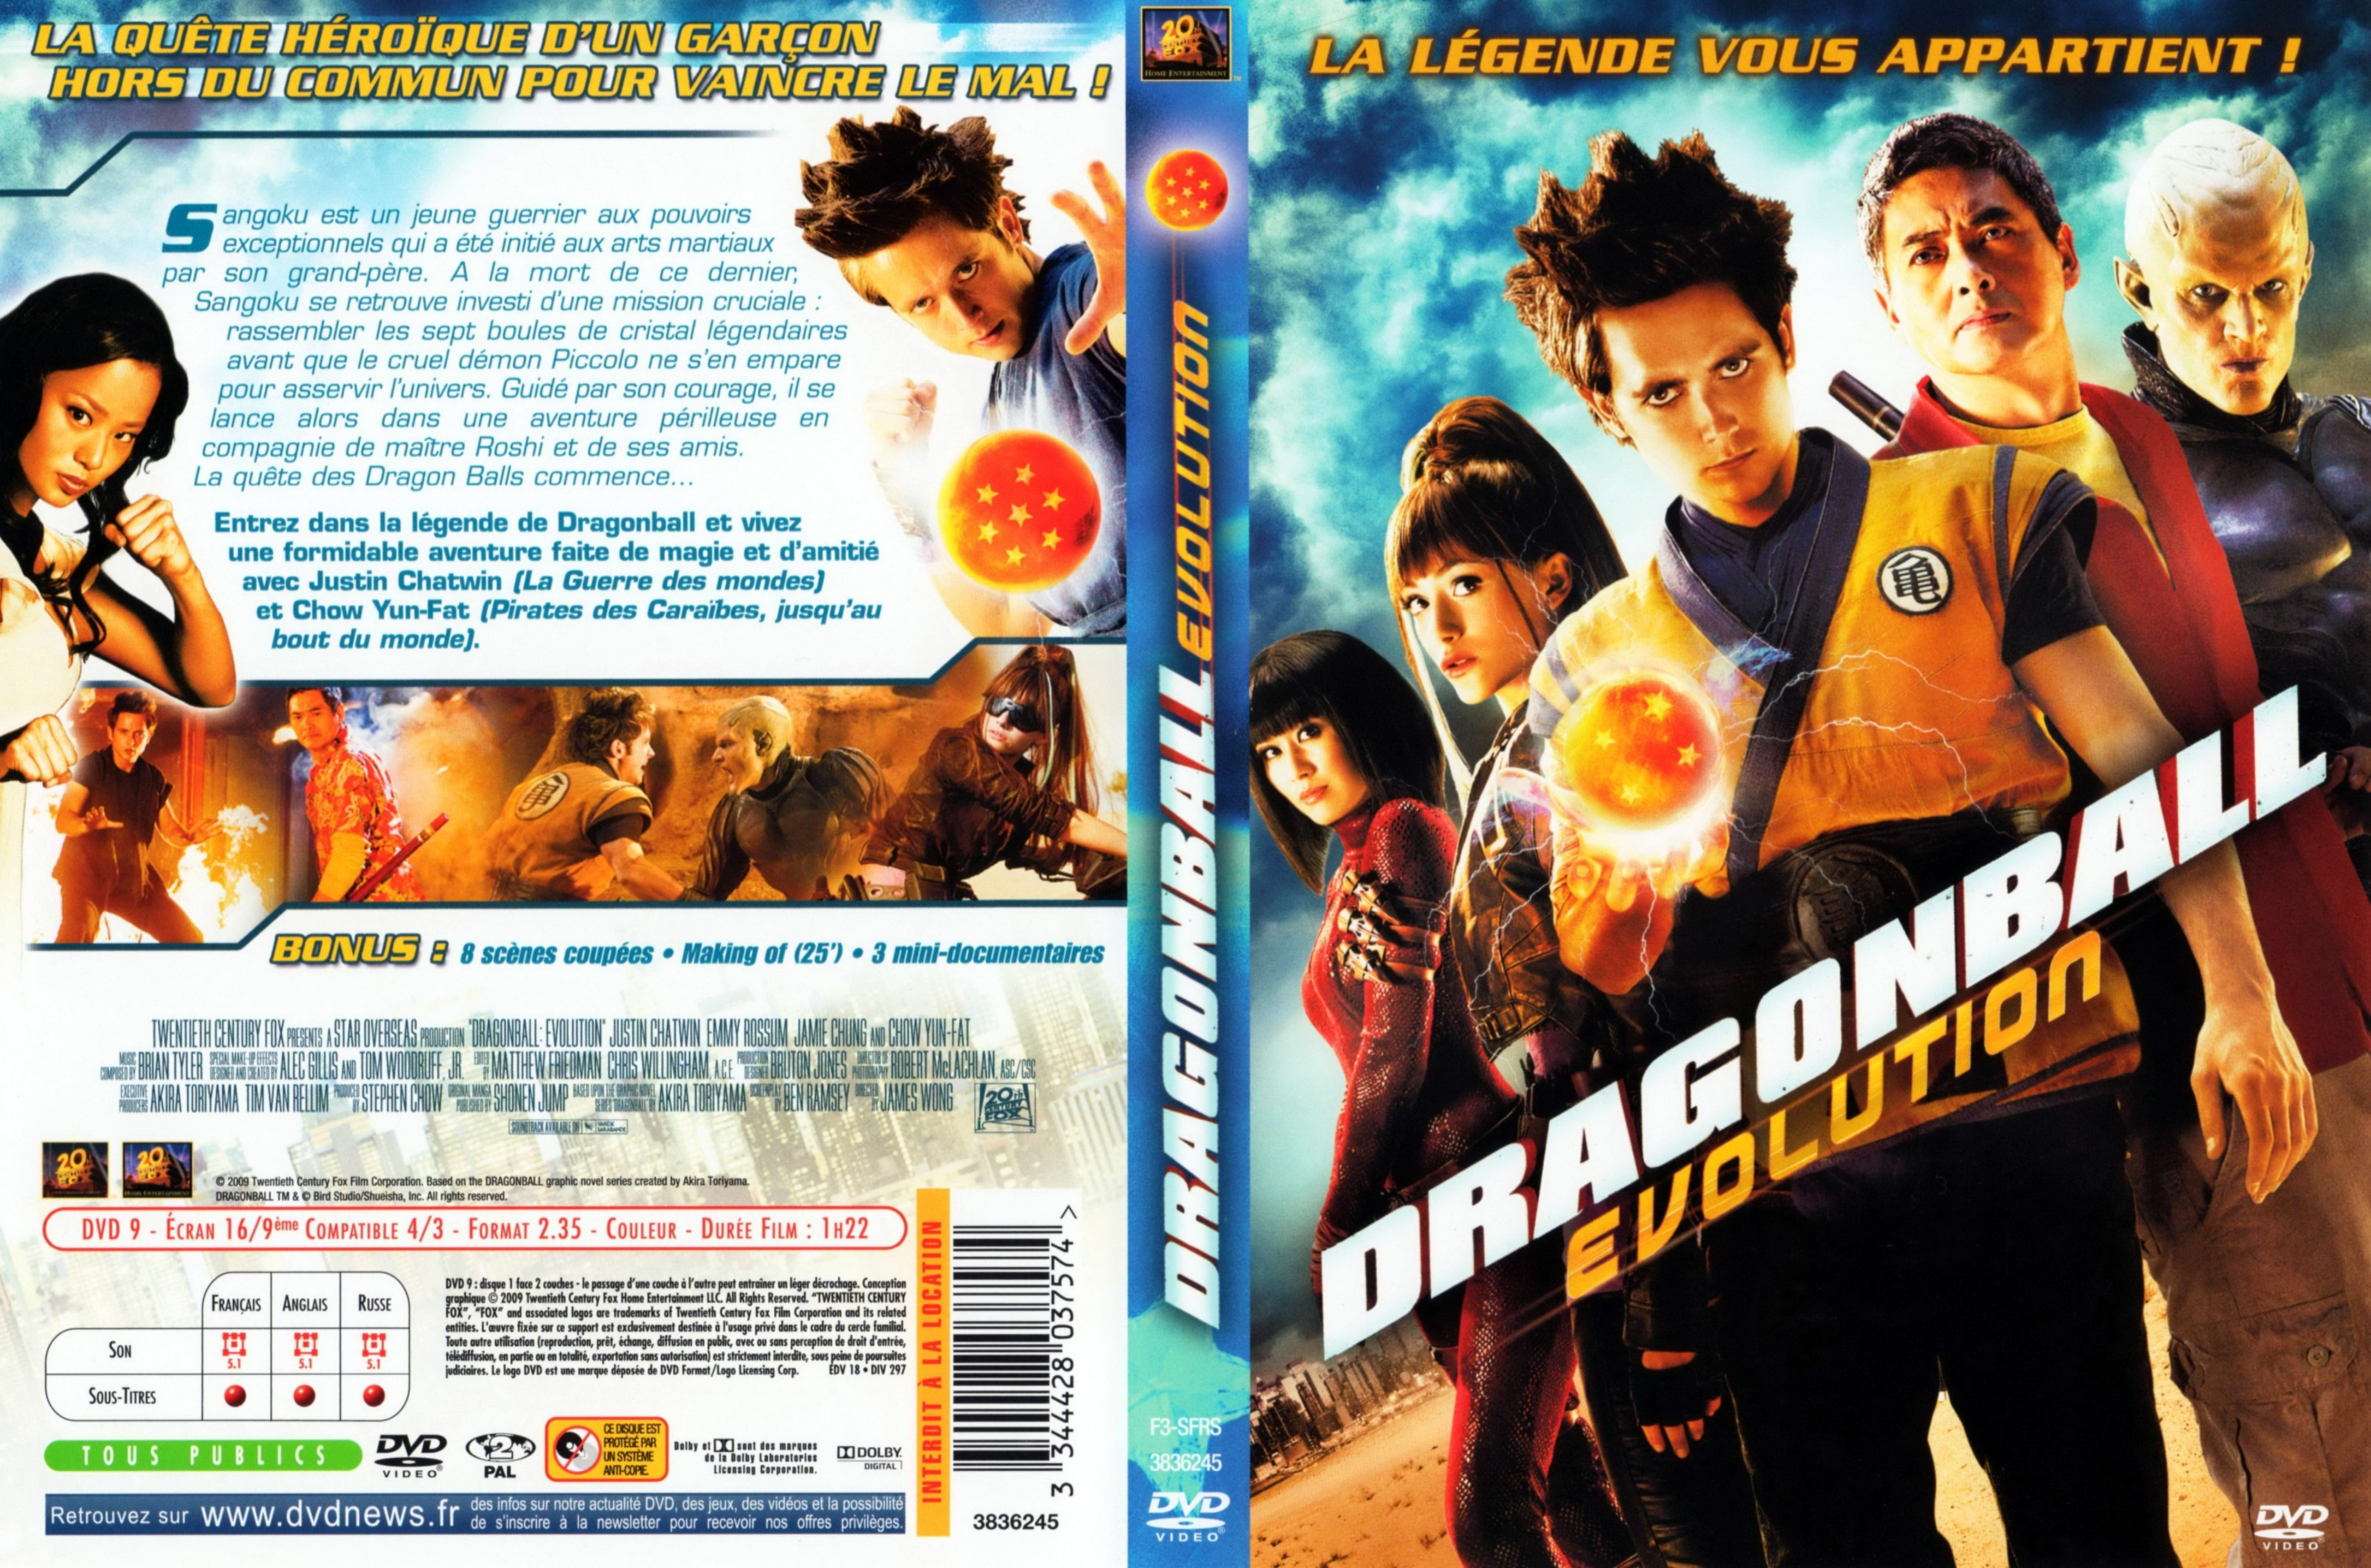 Jaquette DVD Dragonball evolution